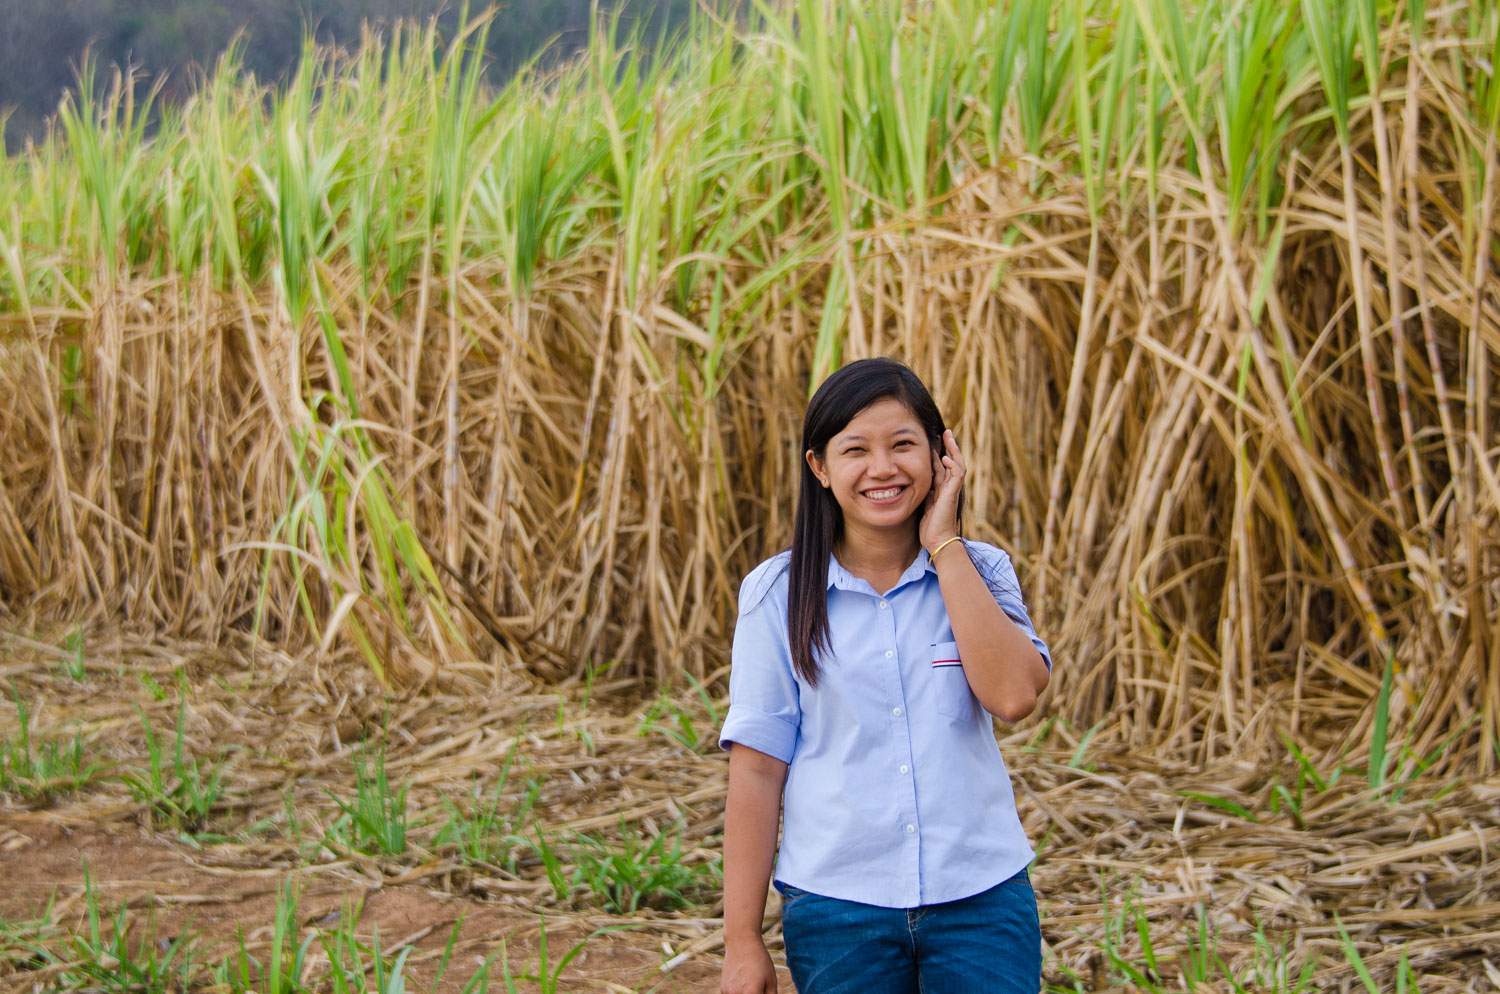 Sugarcane smallholder farmer Chiraphon Rose Bhunpeng, Saraburi province, Thailand. Credit: Joe Woodruff